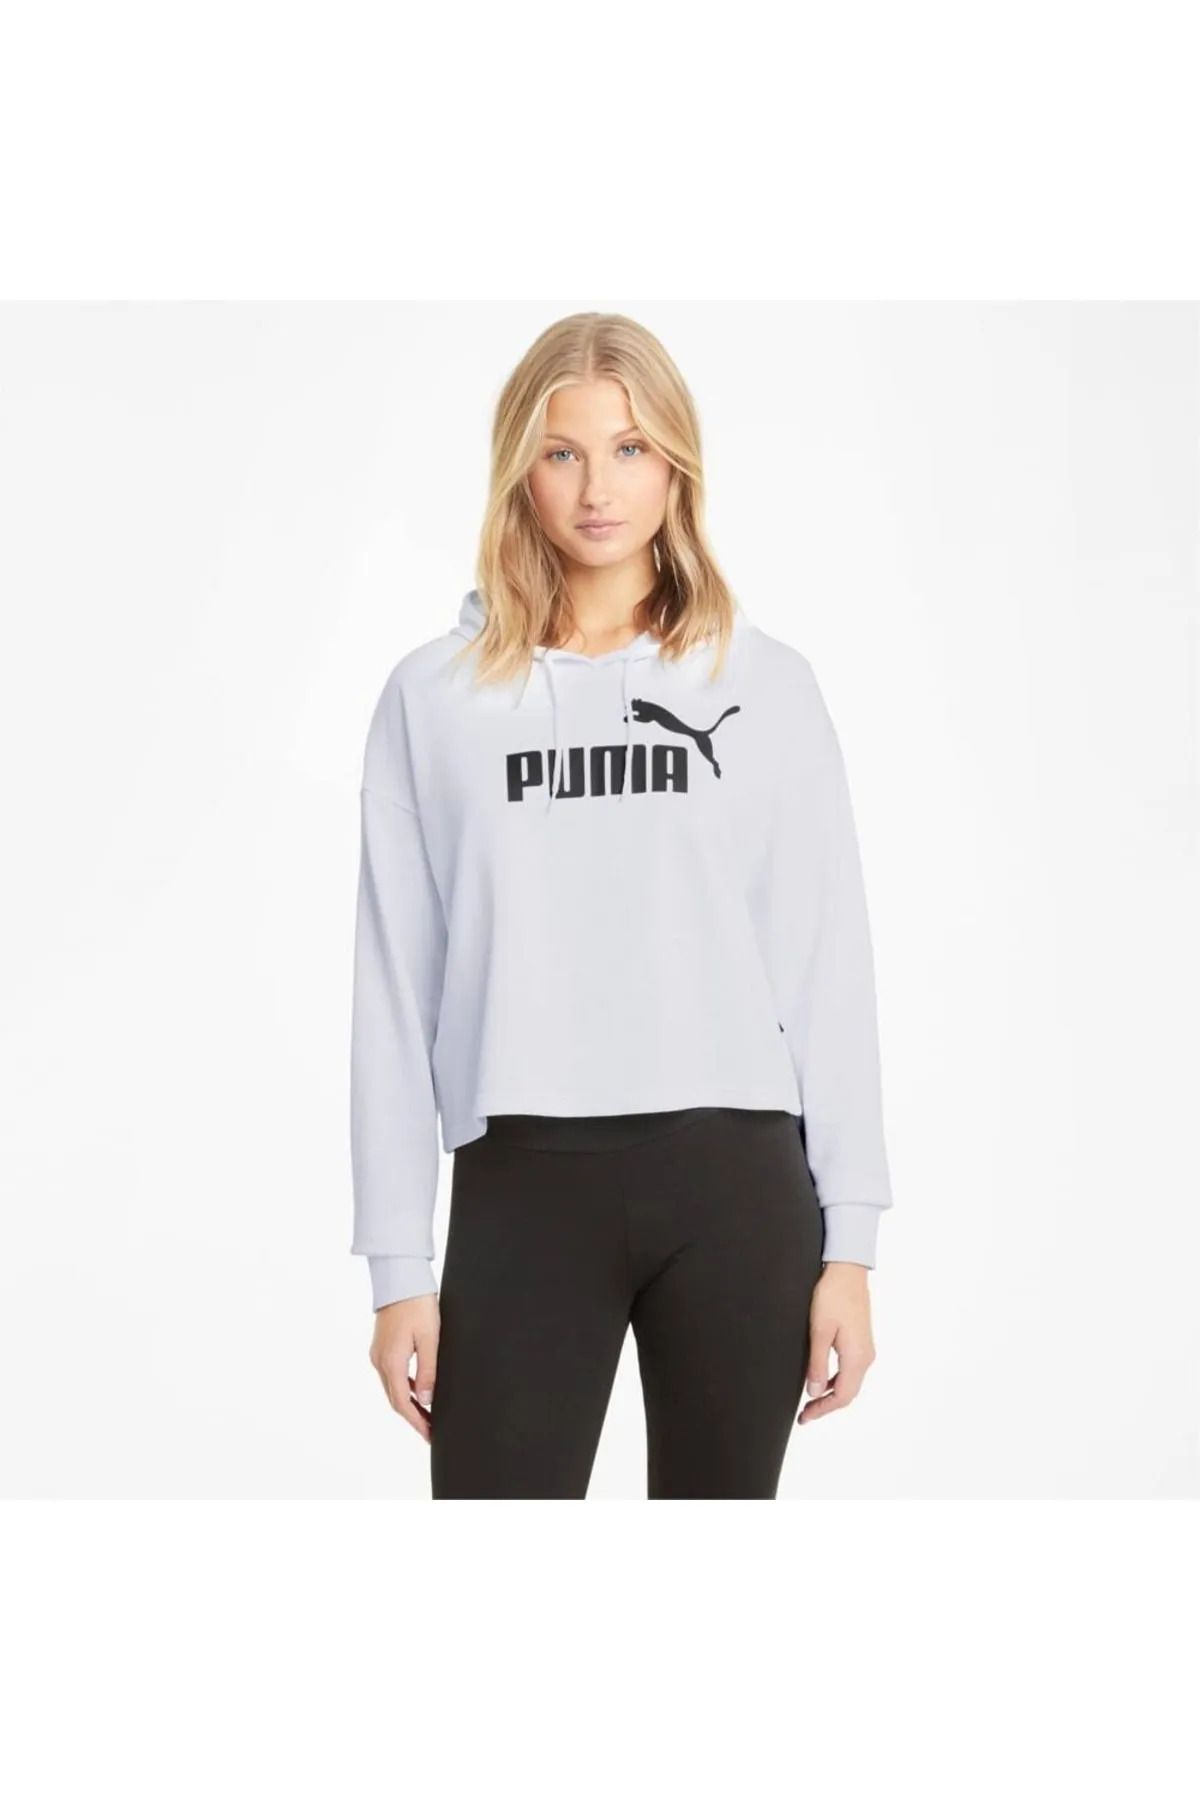 Puma Ess Cropped Logo Hoodie Tr Kadın Sweat 586870-02 White